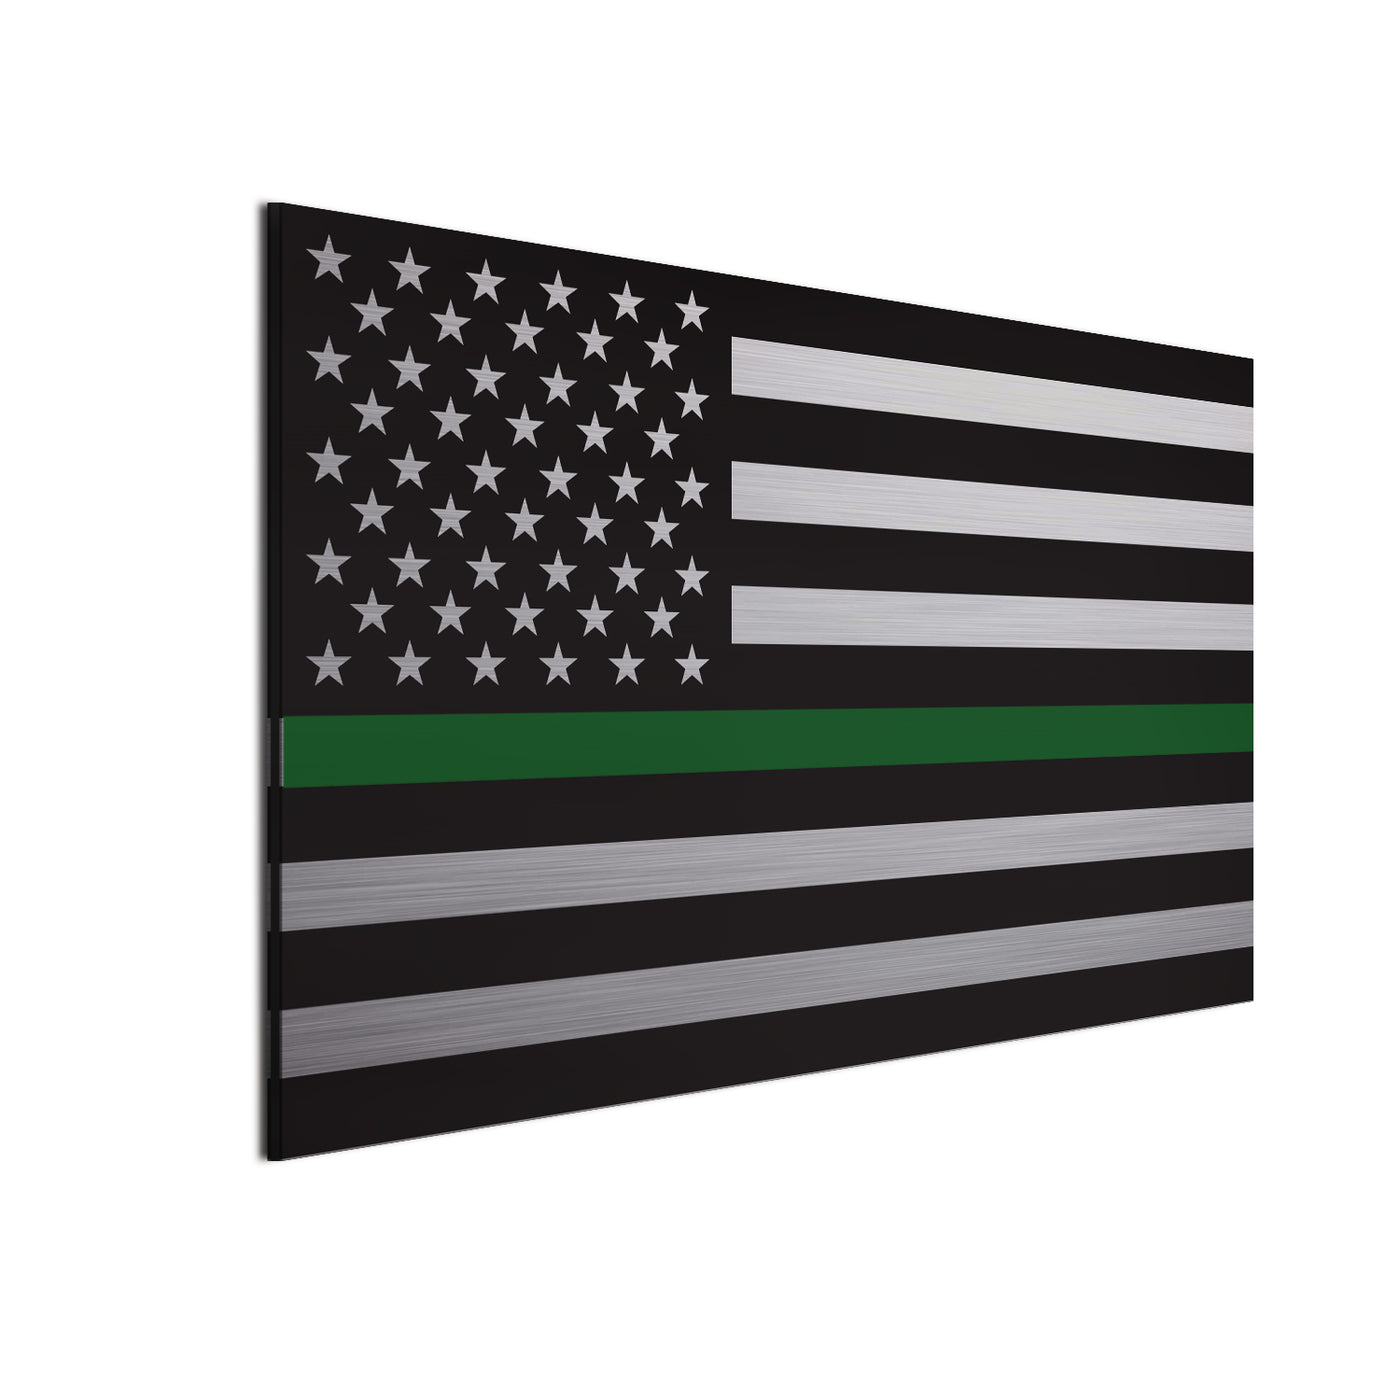 Sliver on black with green stripe.